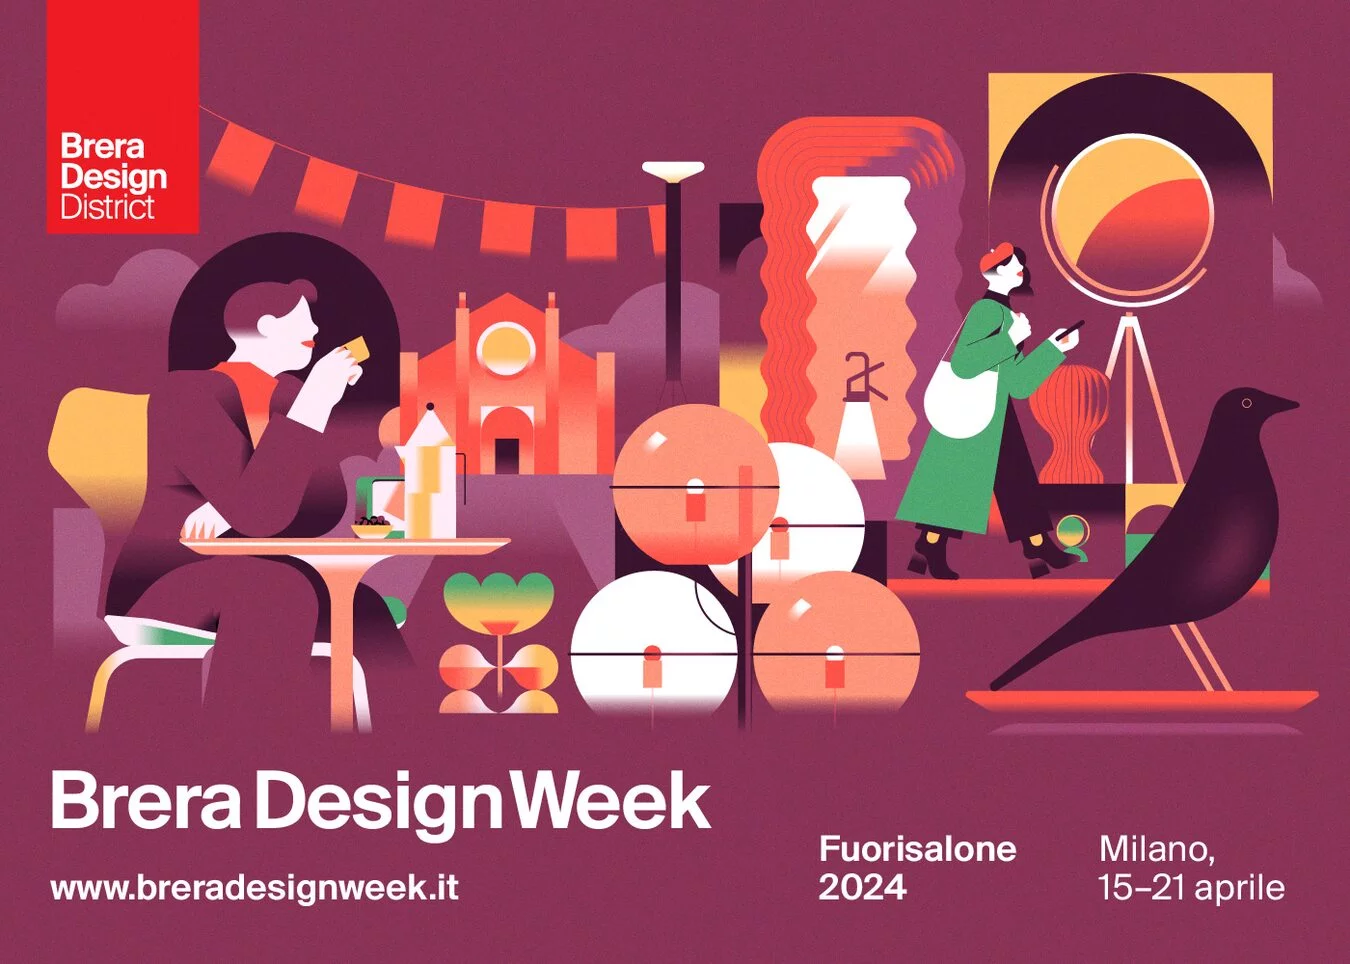 Fuorisalone Brera Design Week 2024